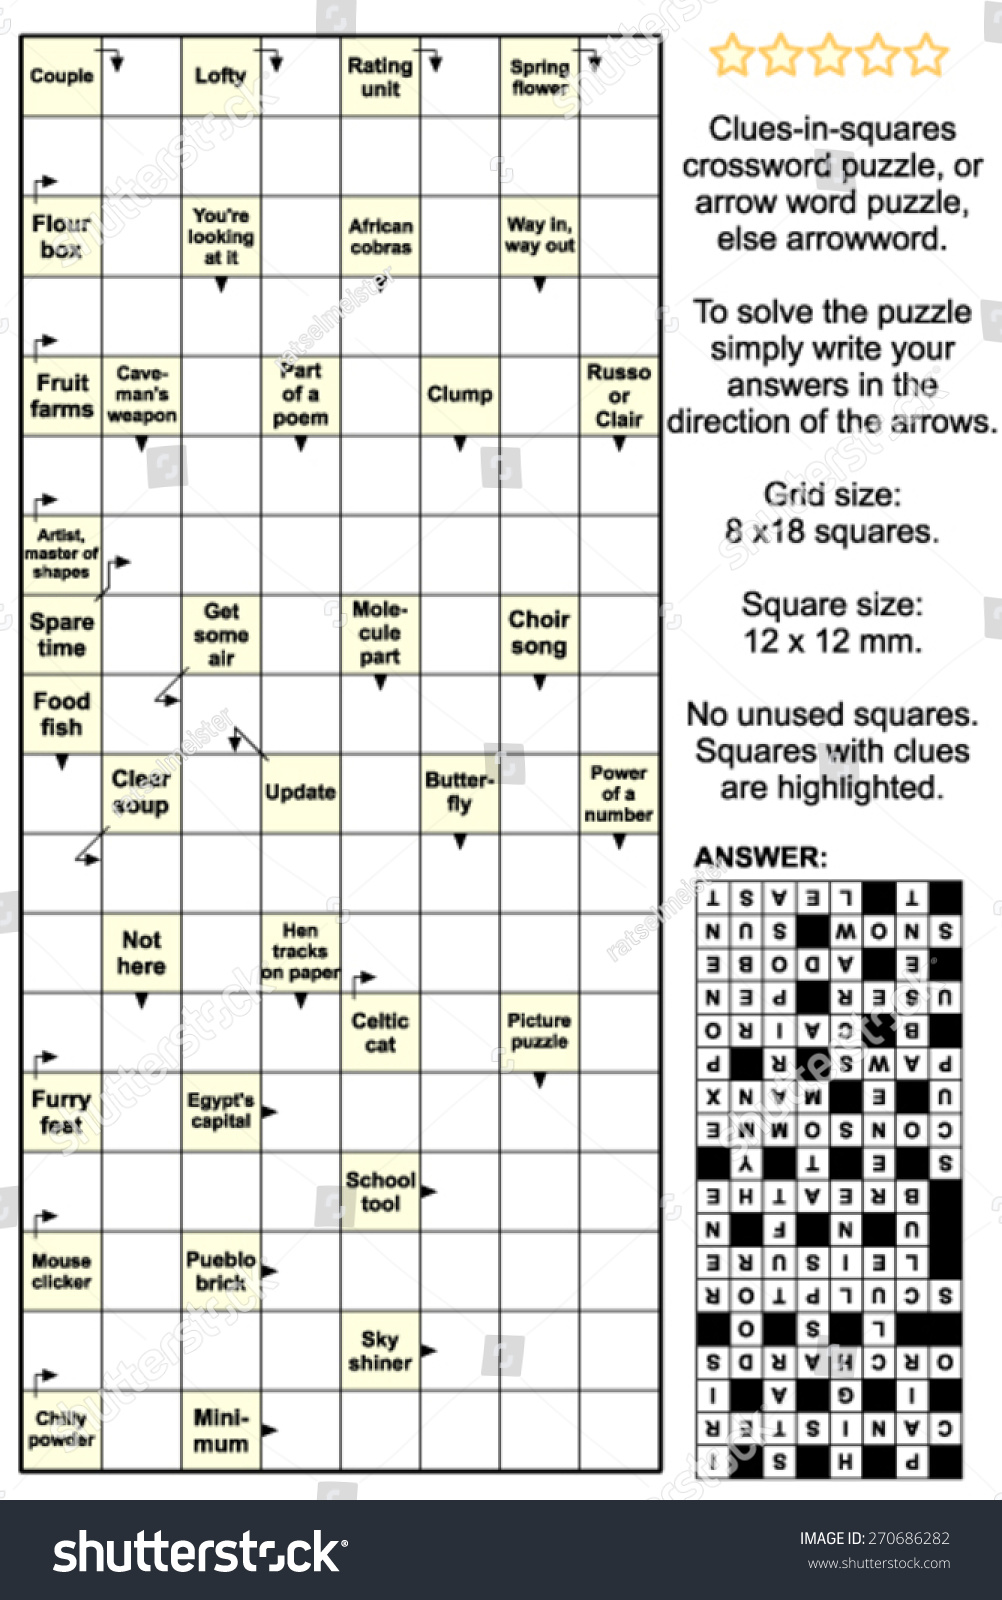 Cluesinsquares Crossword Puzzle Arrow Word Puzzle Stock Vector